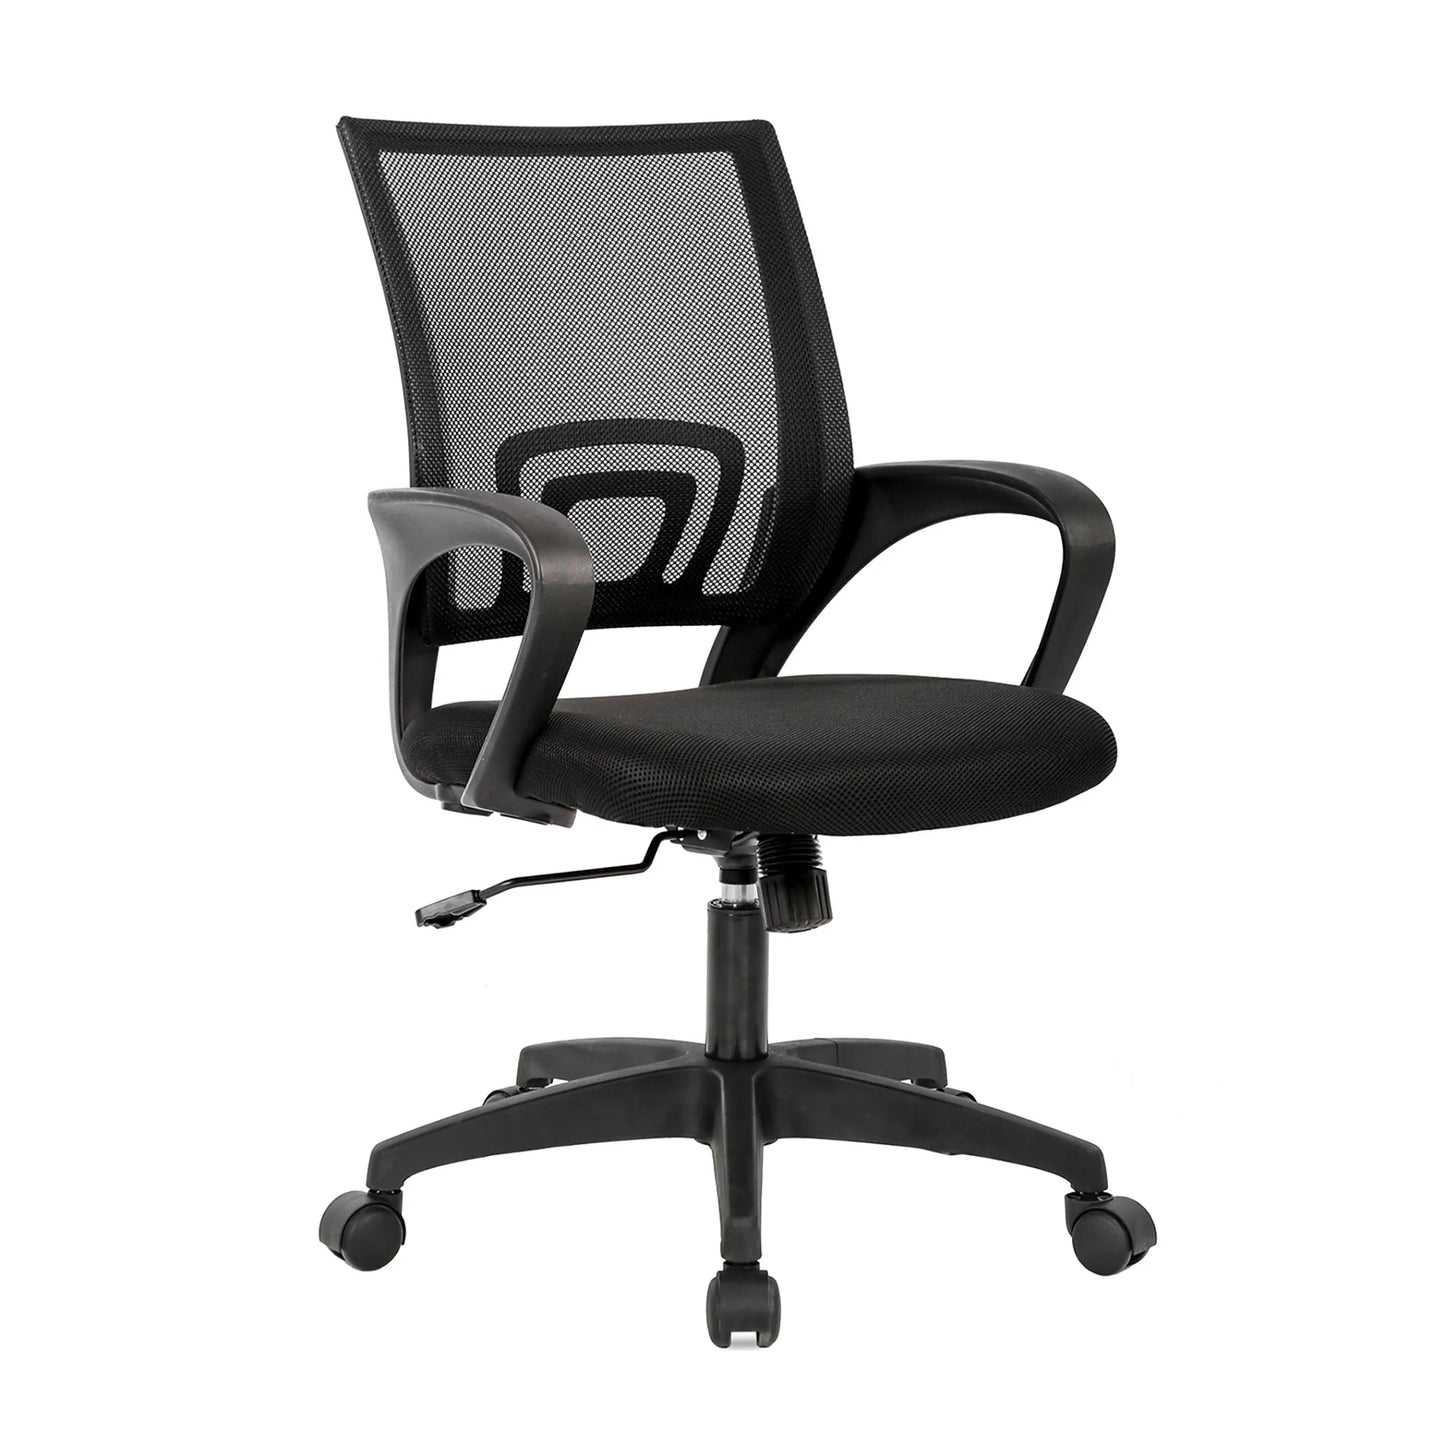 Mesh Office Chair Desk Chair Computer Chair Ergonomic Adjustable